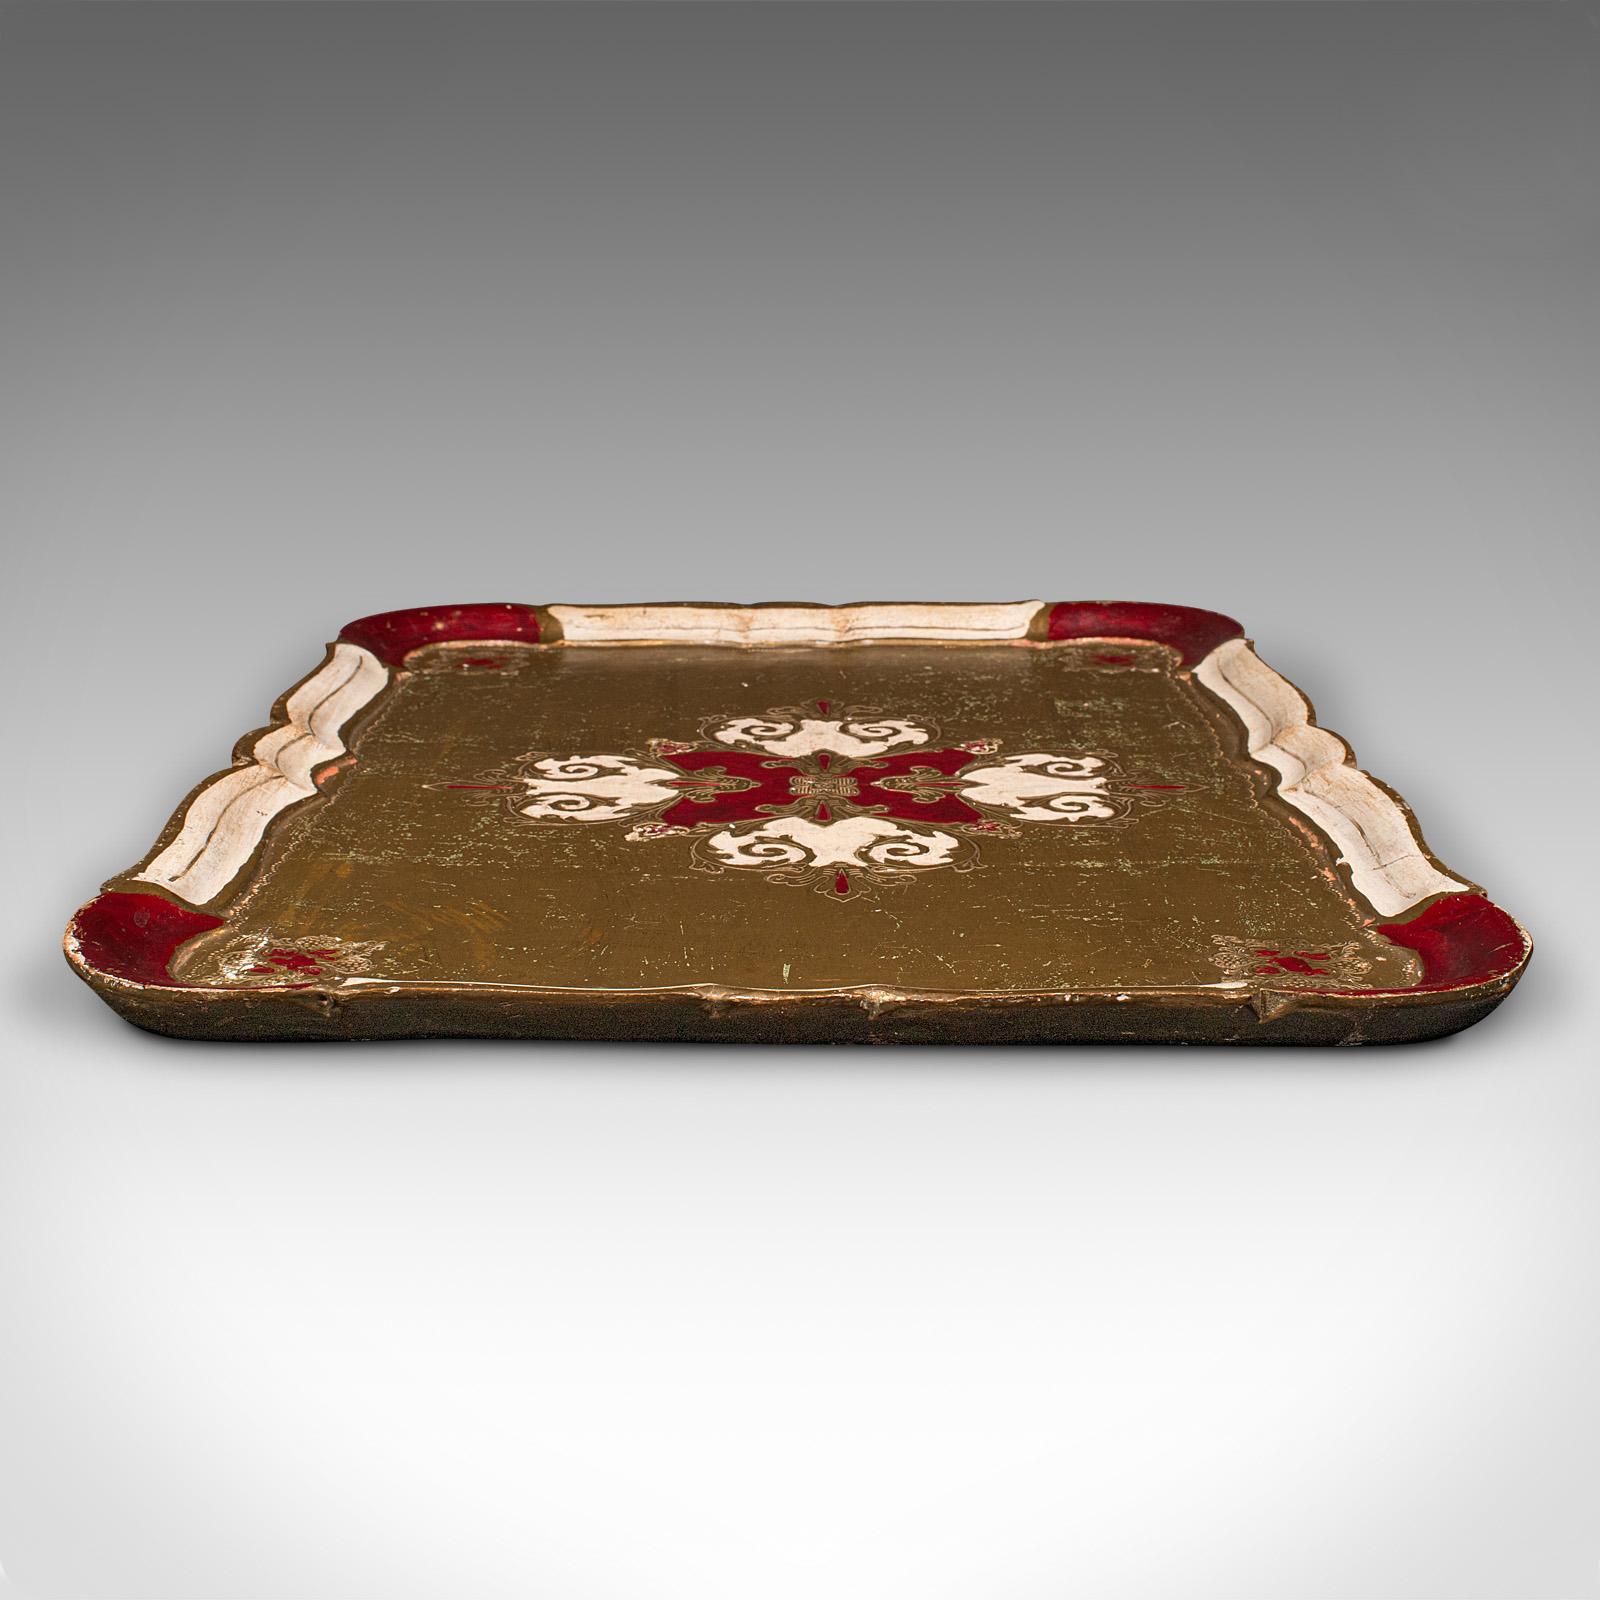 Giltwood Vintage Decorative Tea Tray, Italian, Serving Platter, Baroque Revival, C.1950 For Sale